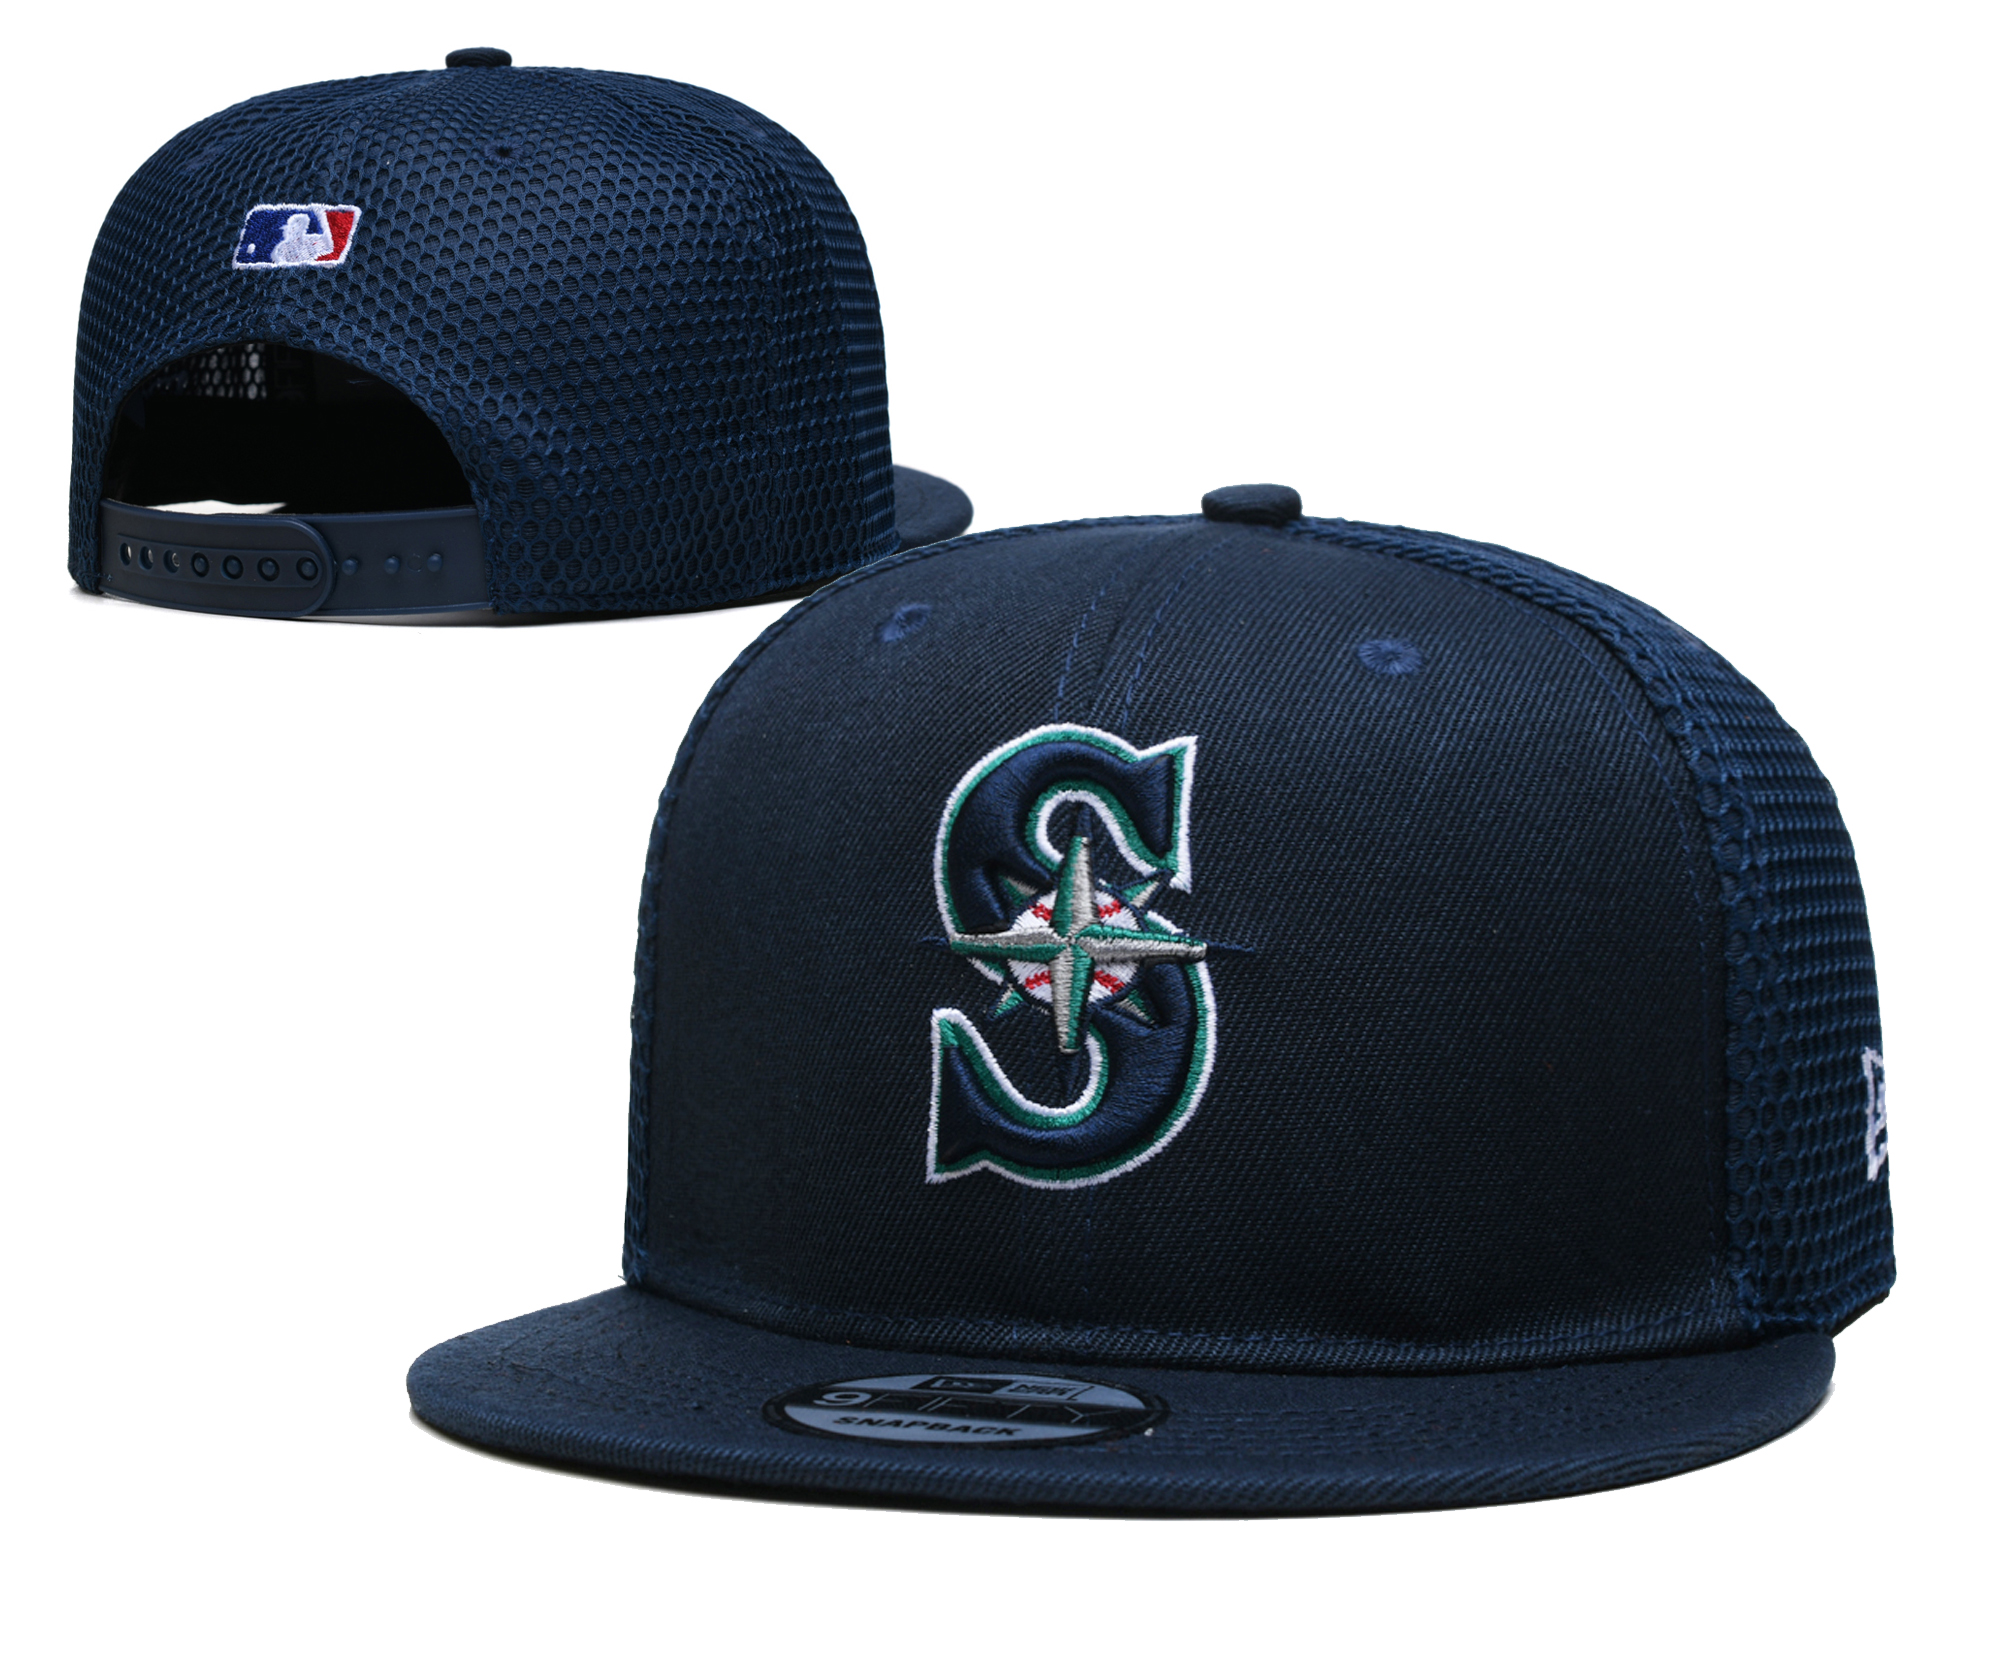 2021 MLB Seattle Mariners #21 TX hat